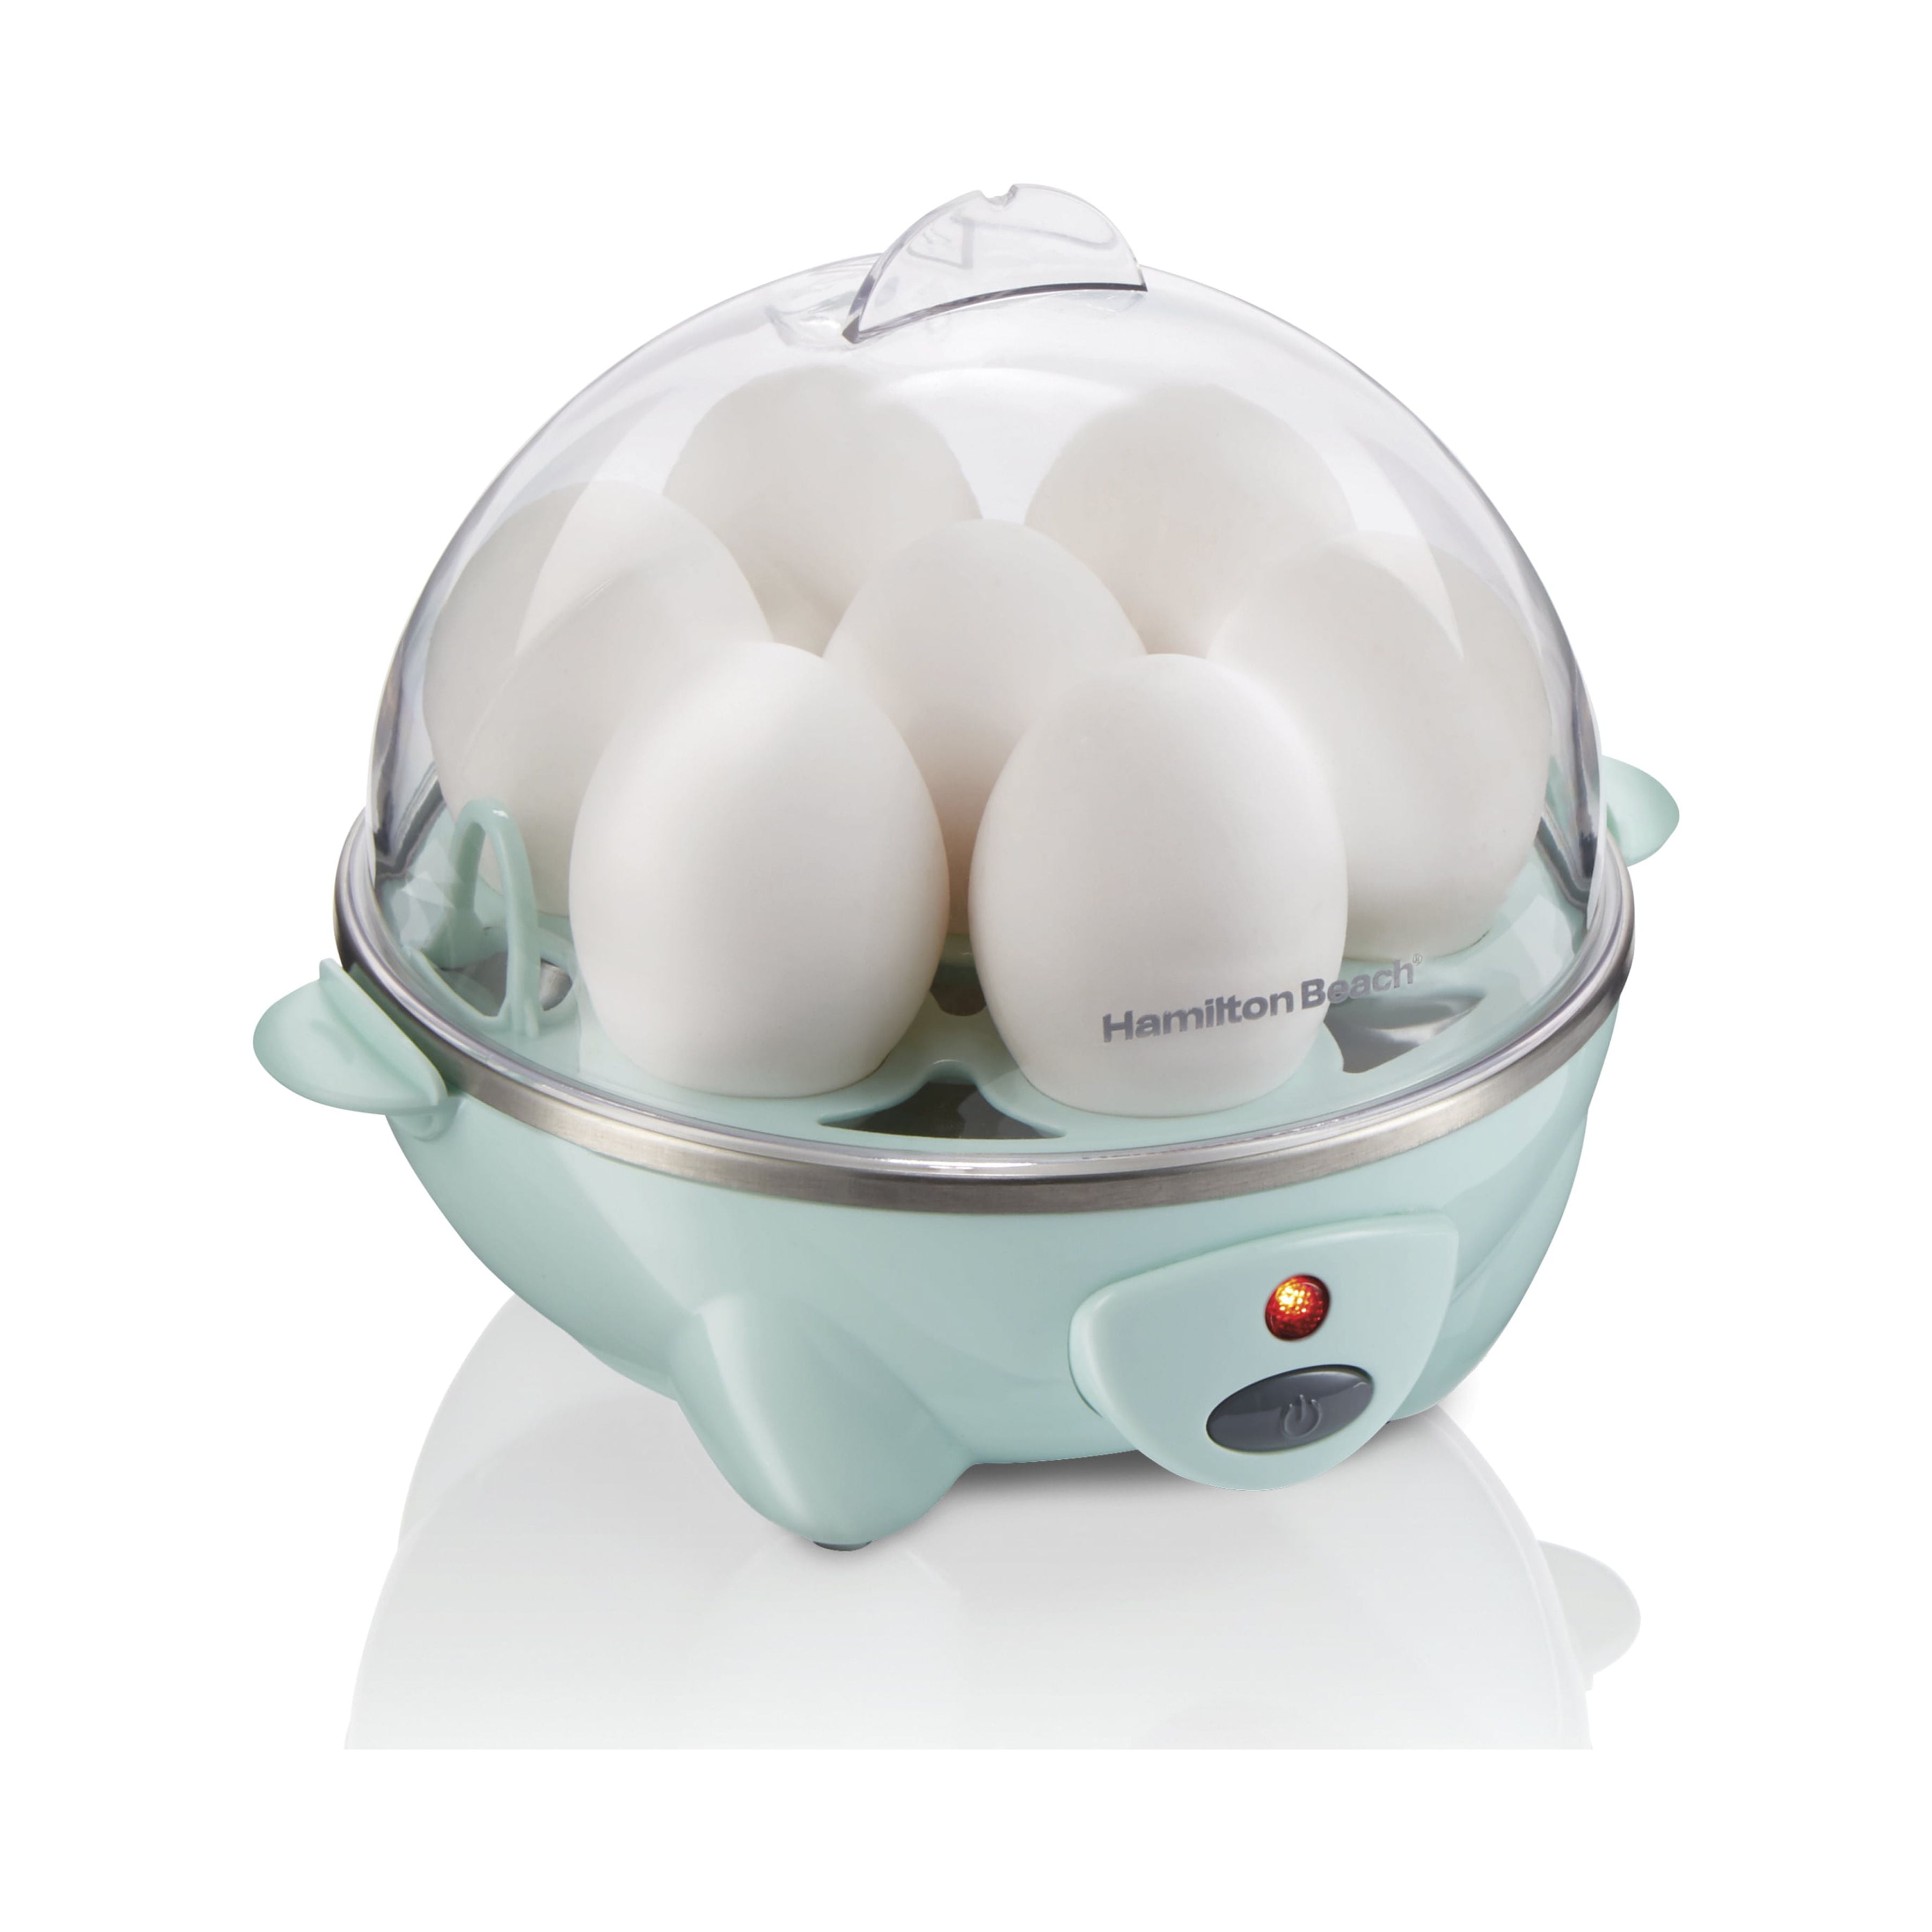 SANE - Hamilton Beach 7 egg cooker. Make soft-, medium-